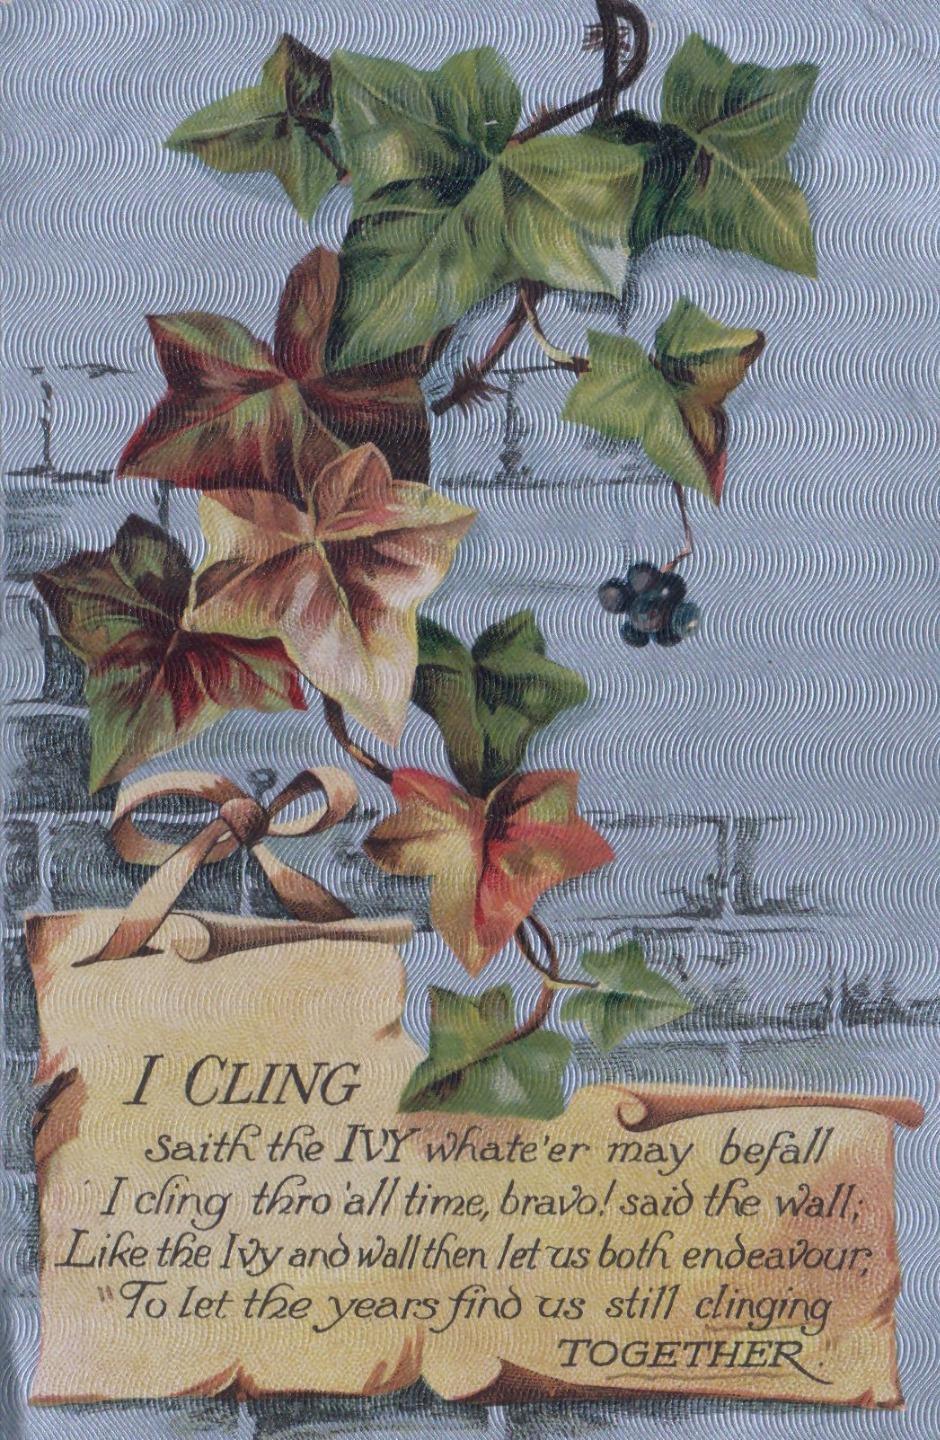 1904 ANTIQUE Silver Gilt I Cling Saith the Ivy POSTCARD - INTERESTING Message